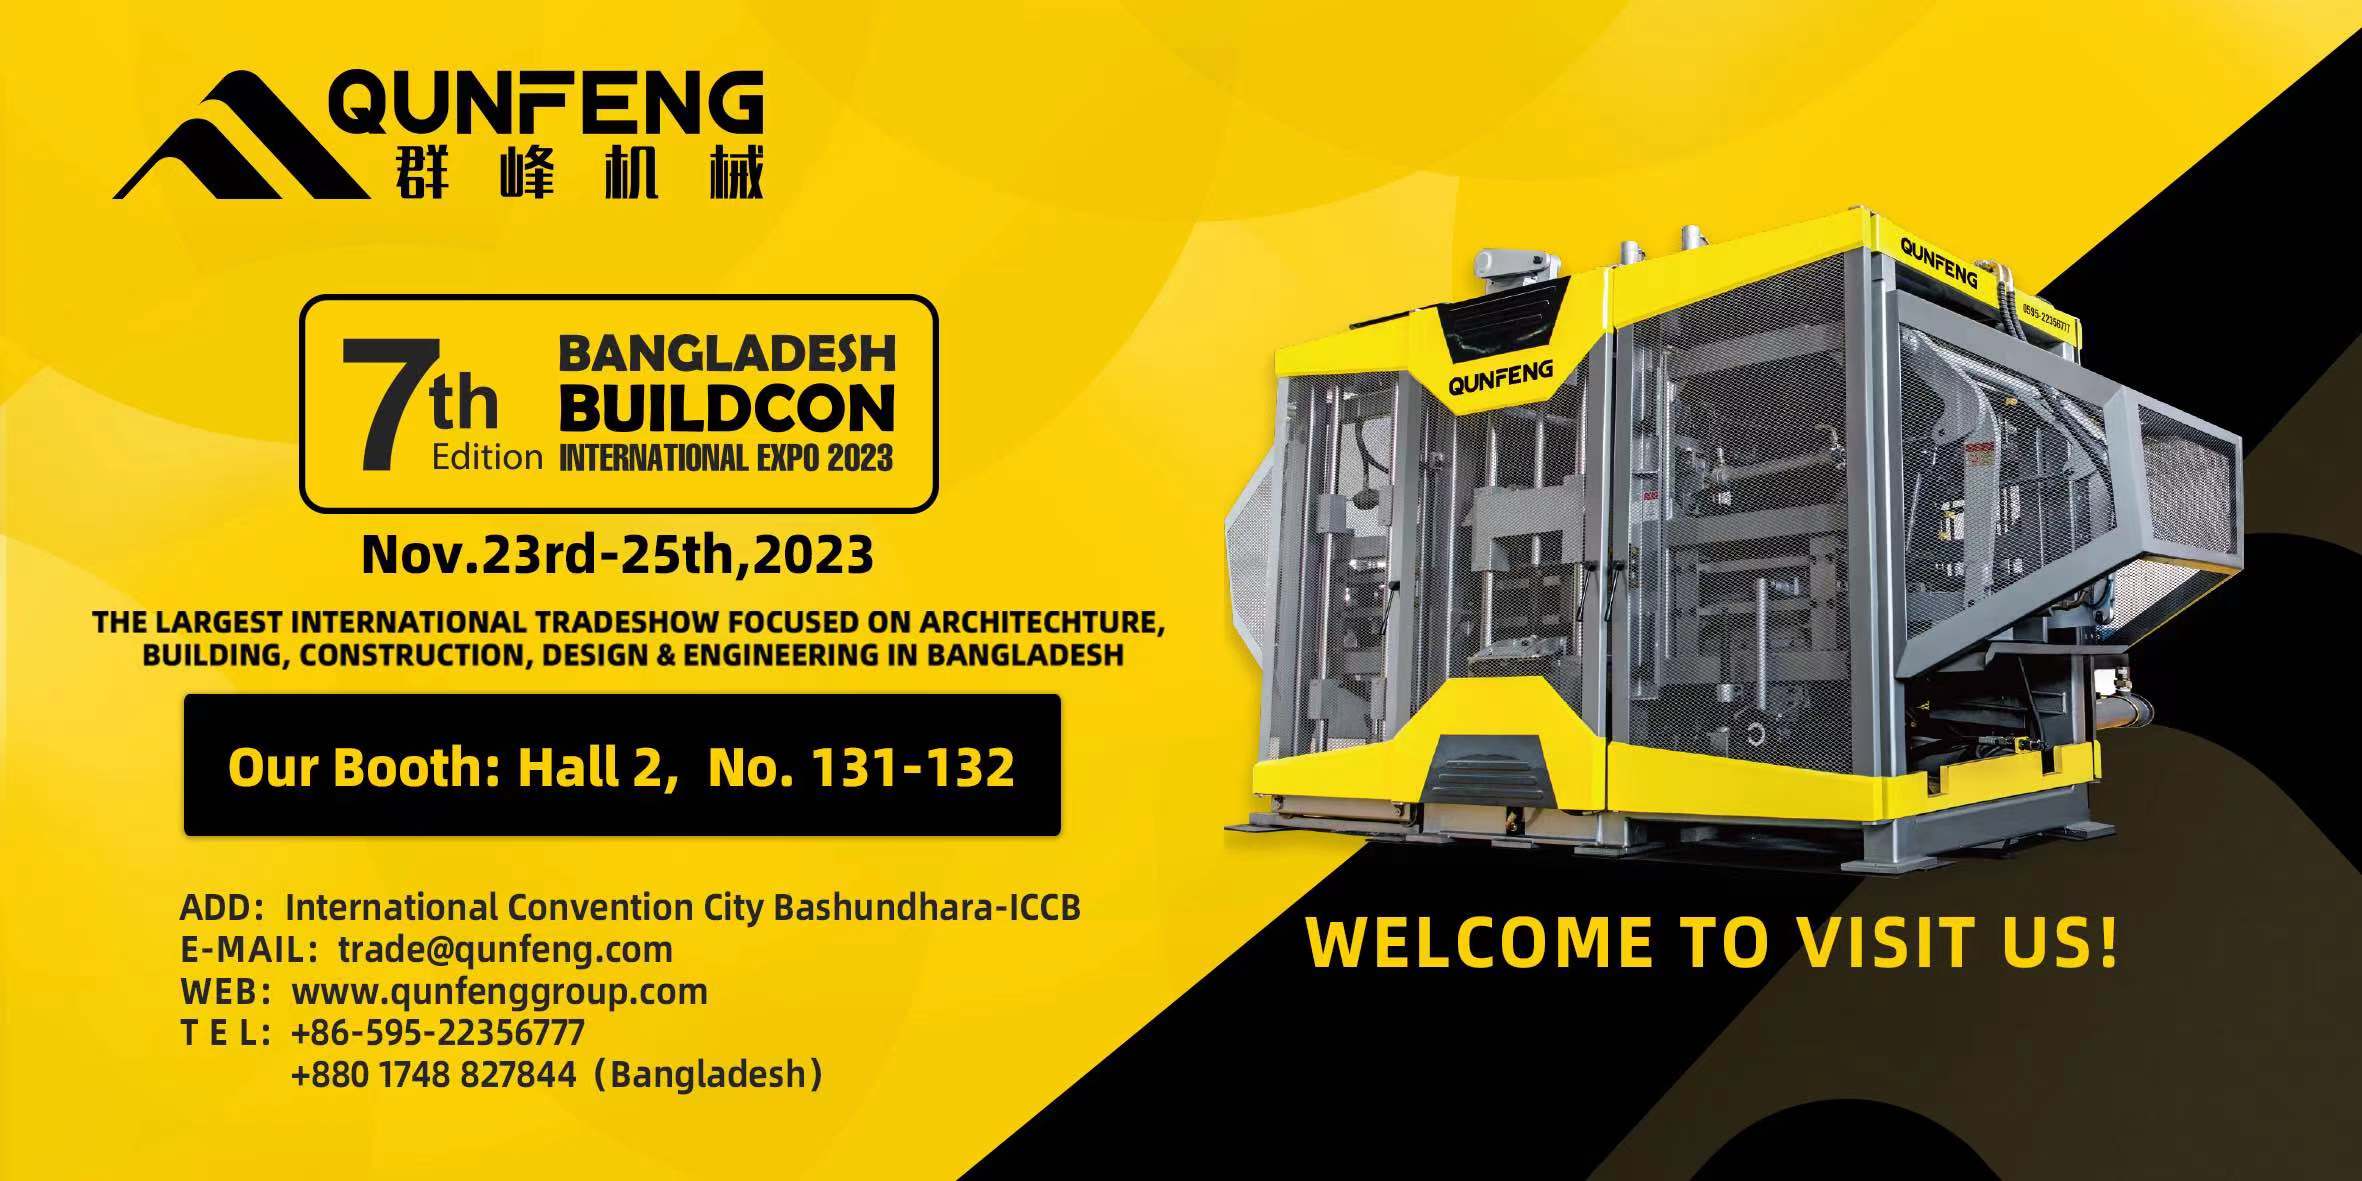 Qunfeng Will Be at the BANGLADESH BUILDCON 2023